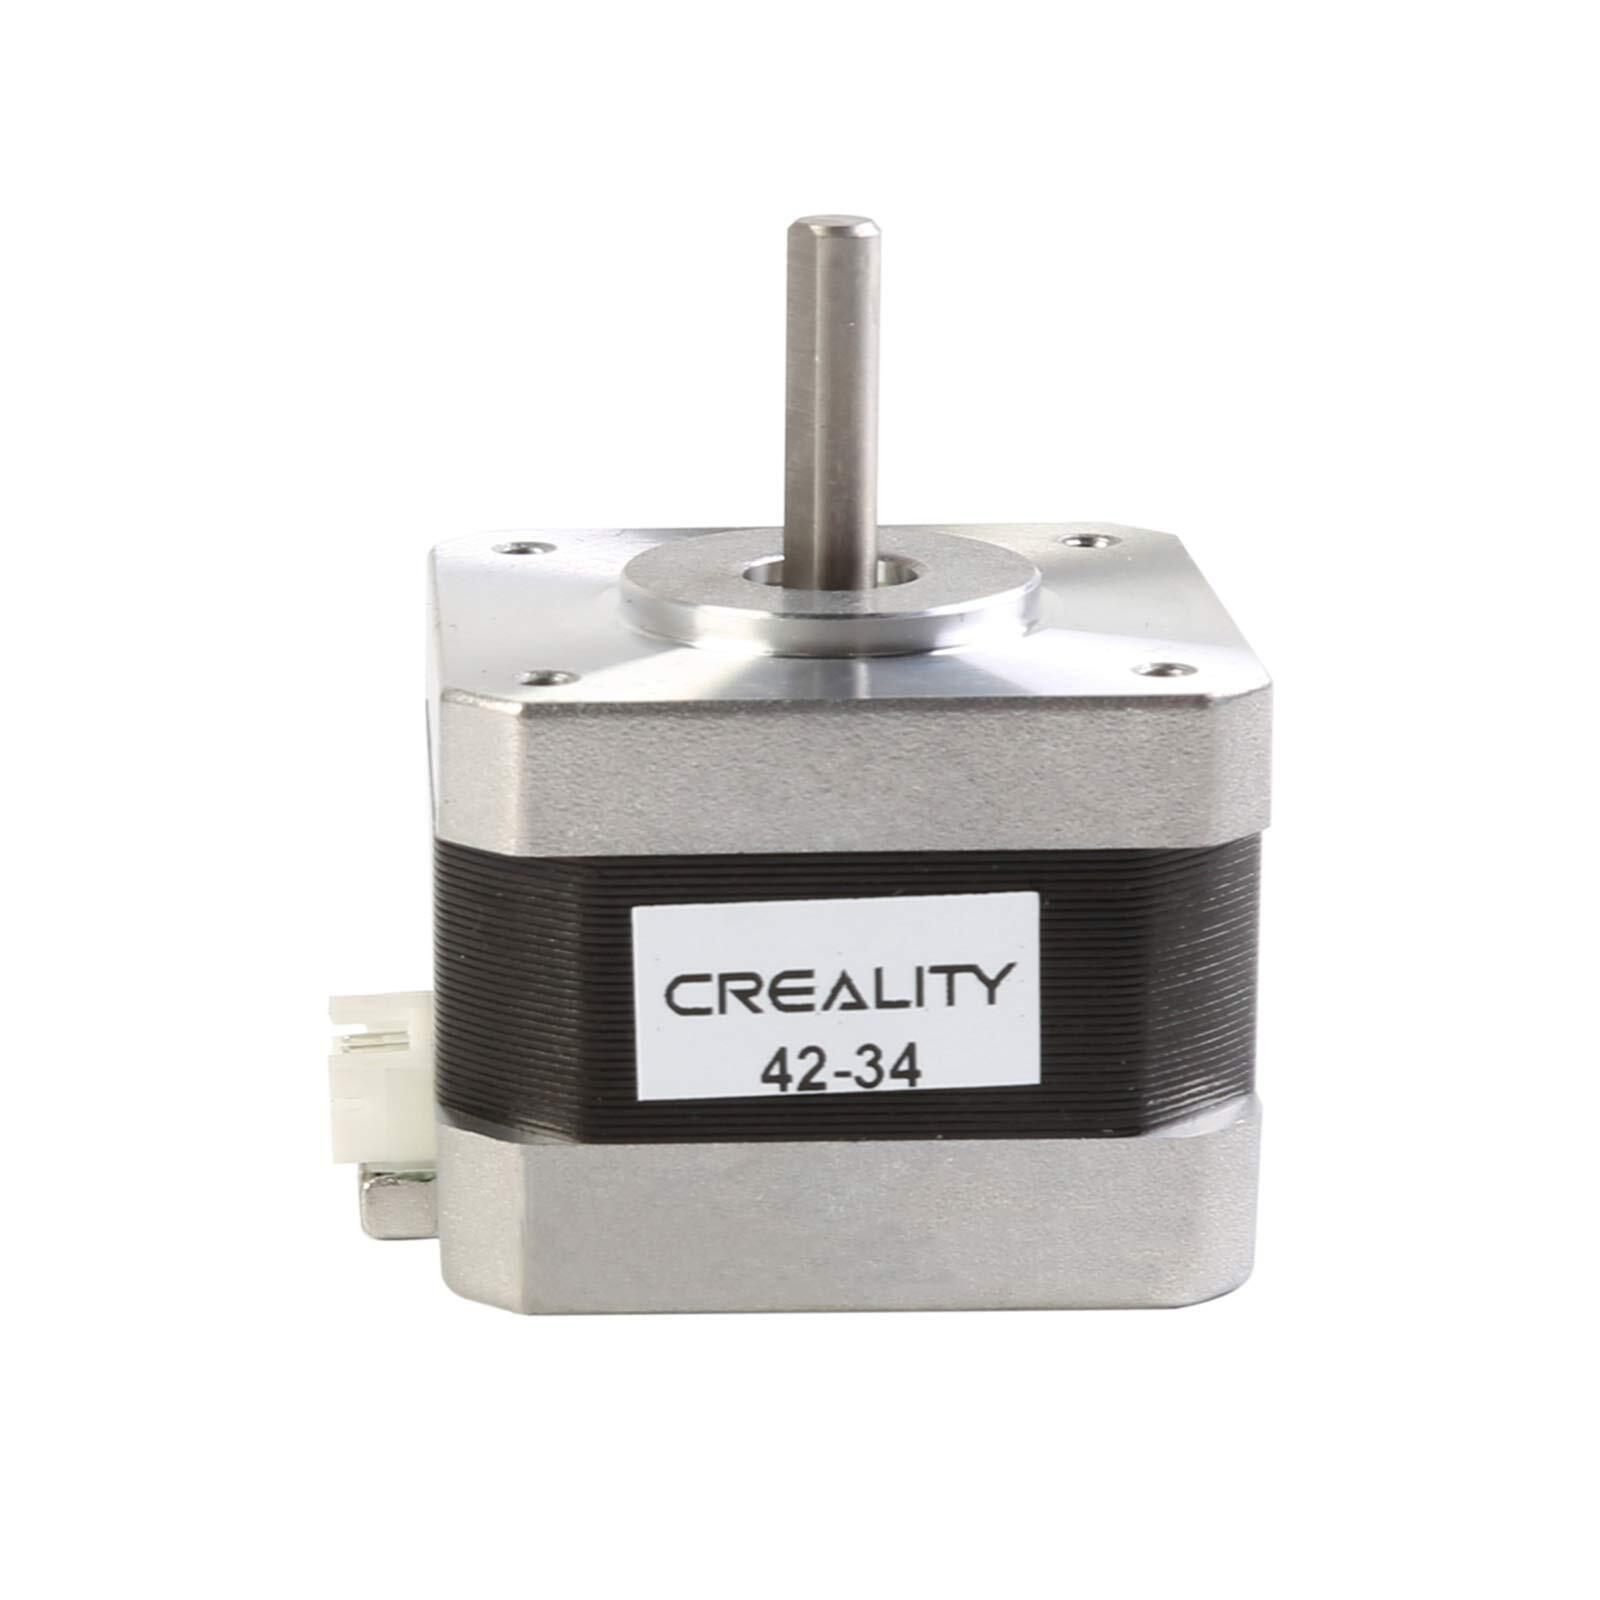 Creality FDM 3D Printer Stepper Motor 42-34, 2 Phases 0.8A 1.8 Degrees 0.4 N.M 4